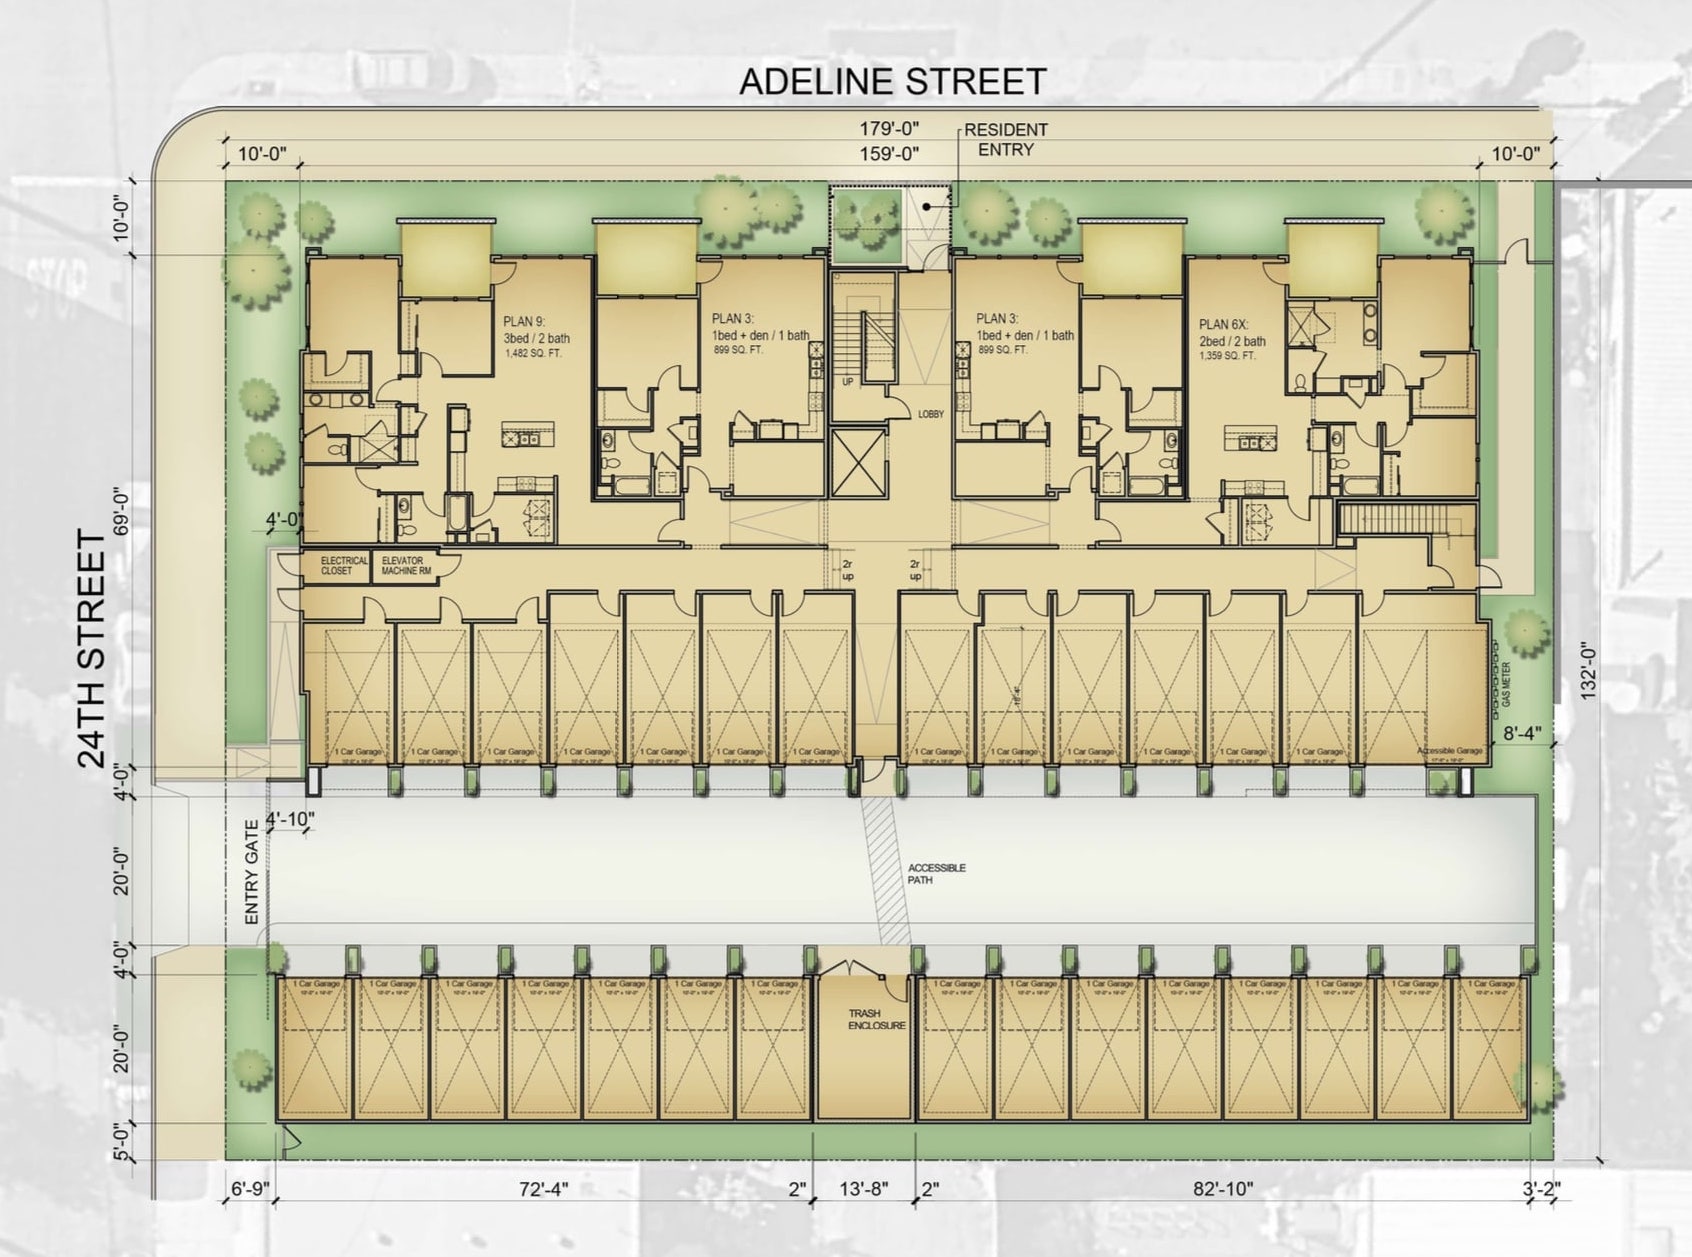 2400 Adeline Street Sit Plan via KTGY Architecture + Planning